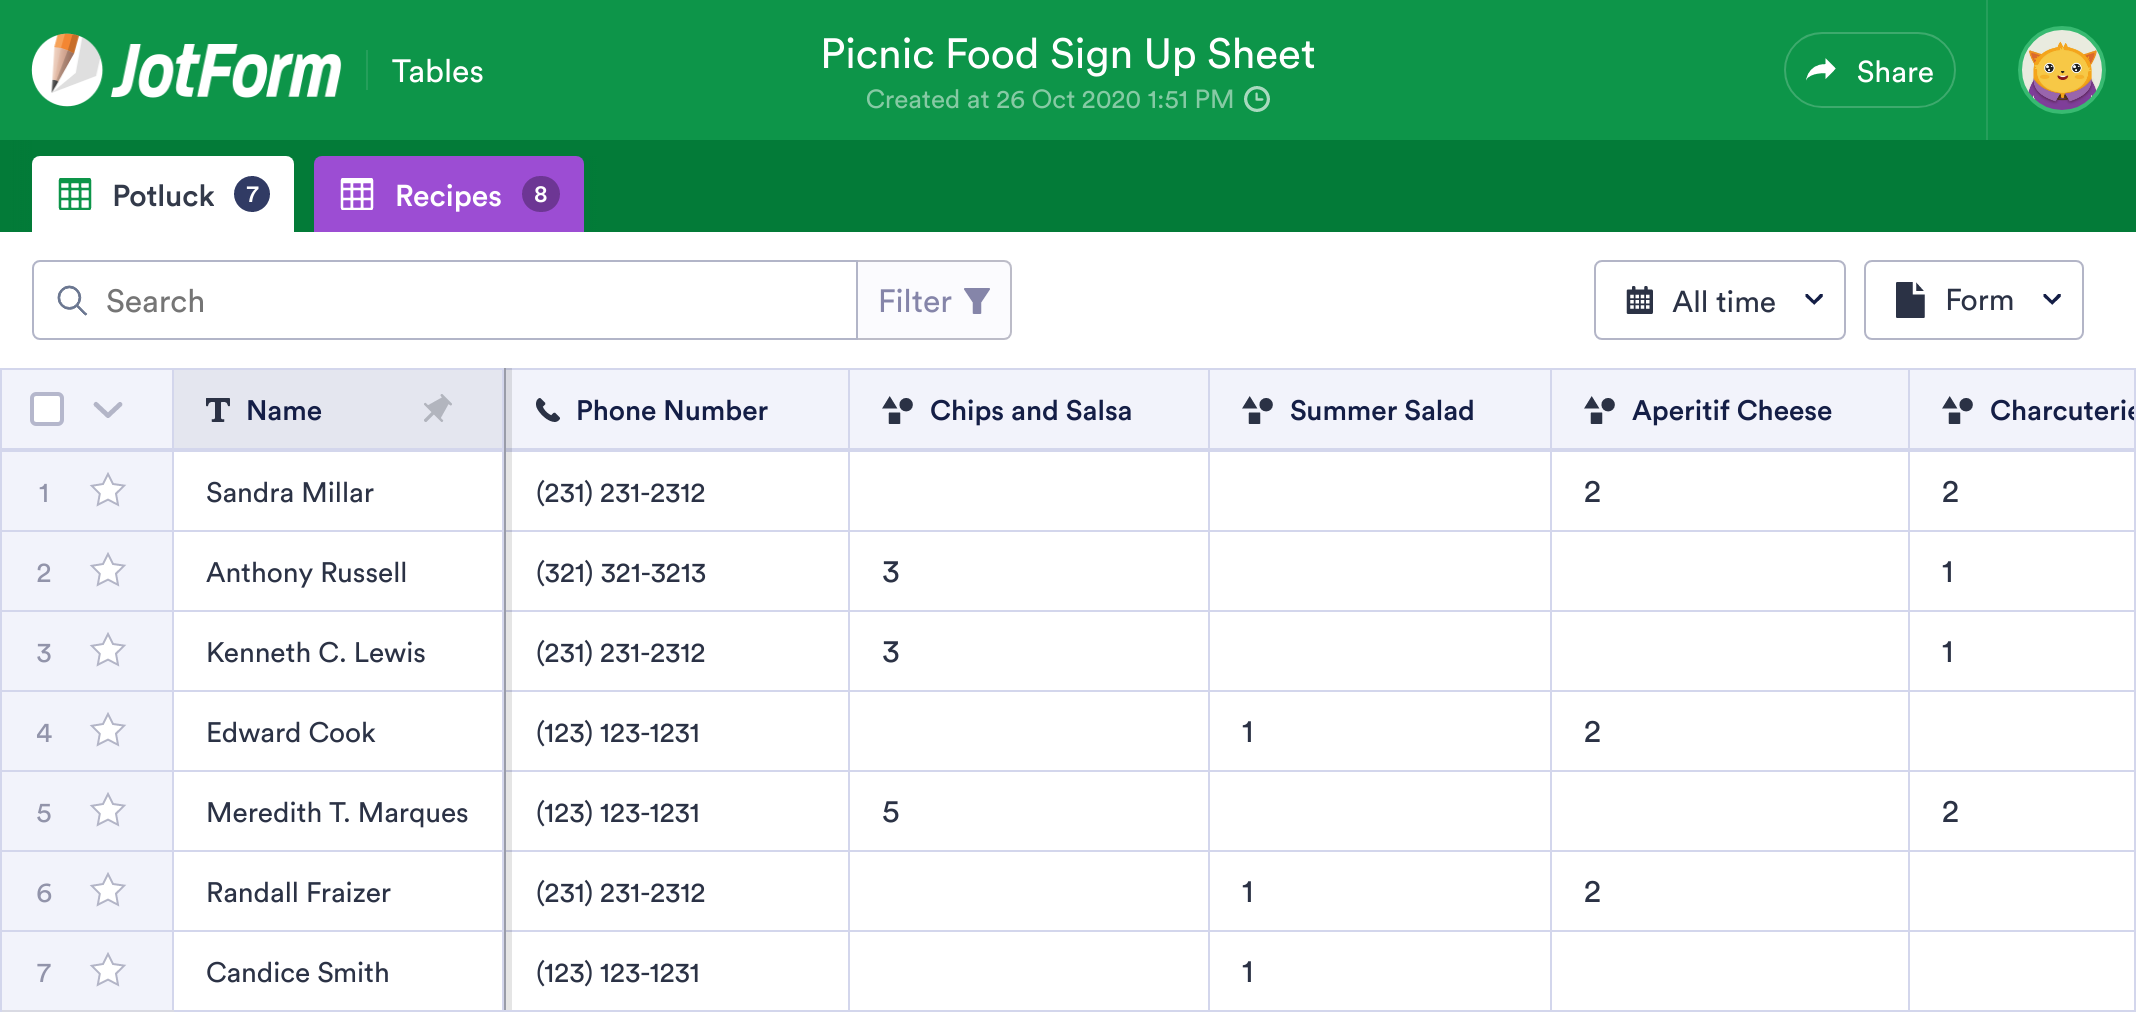 Picnic Food Sign Up Sheet Template | JotForm Tables